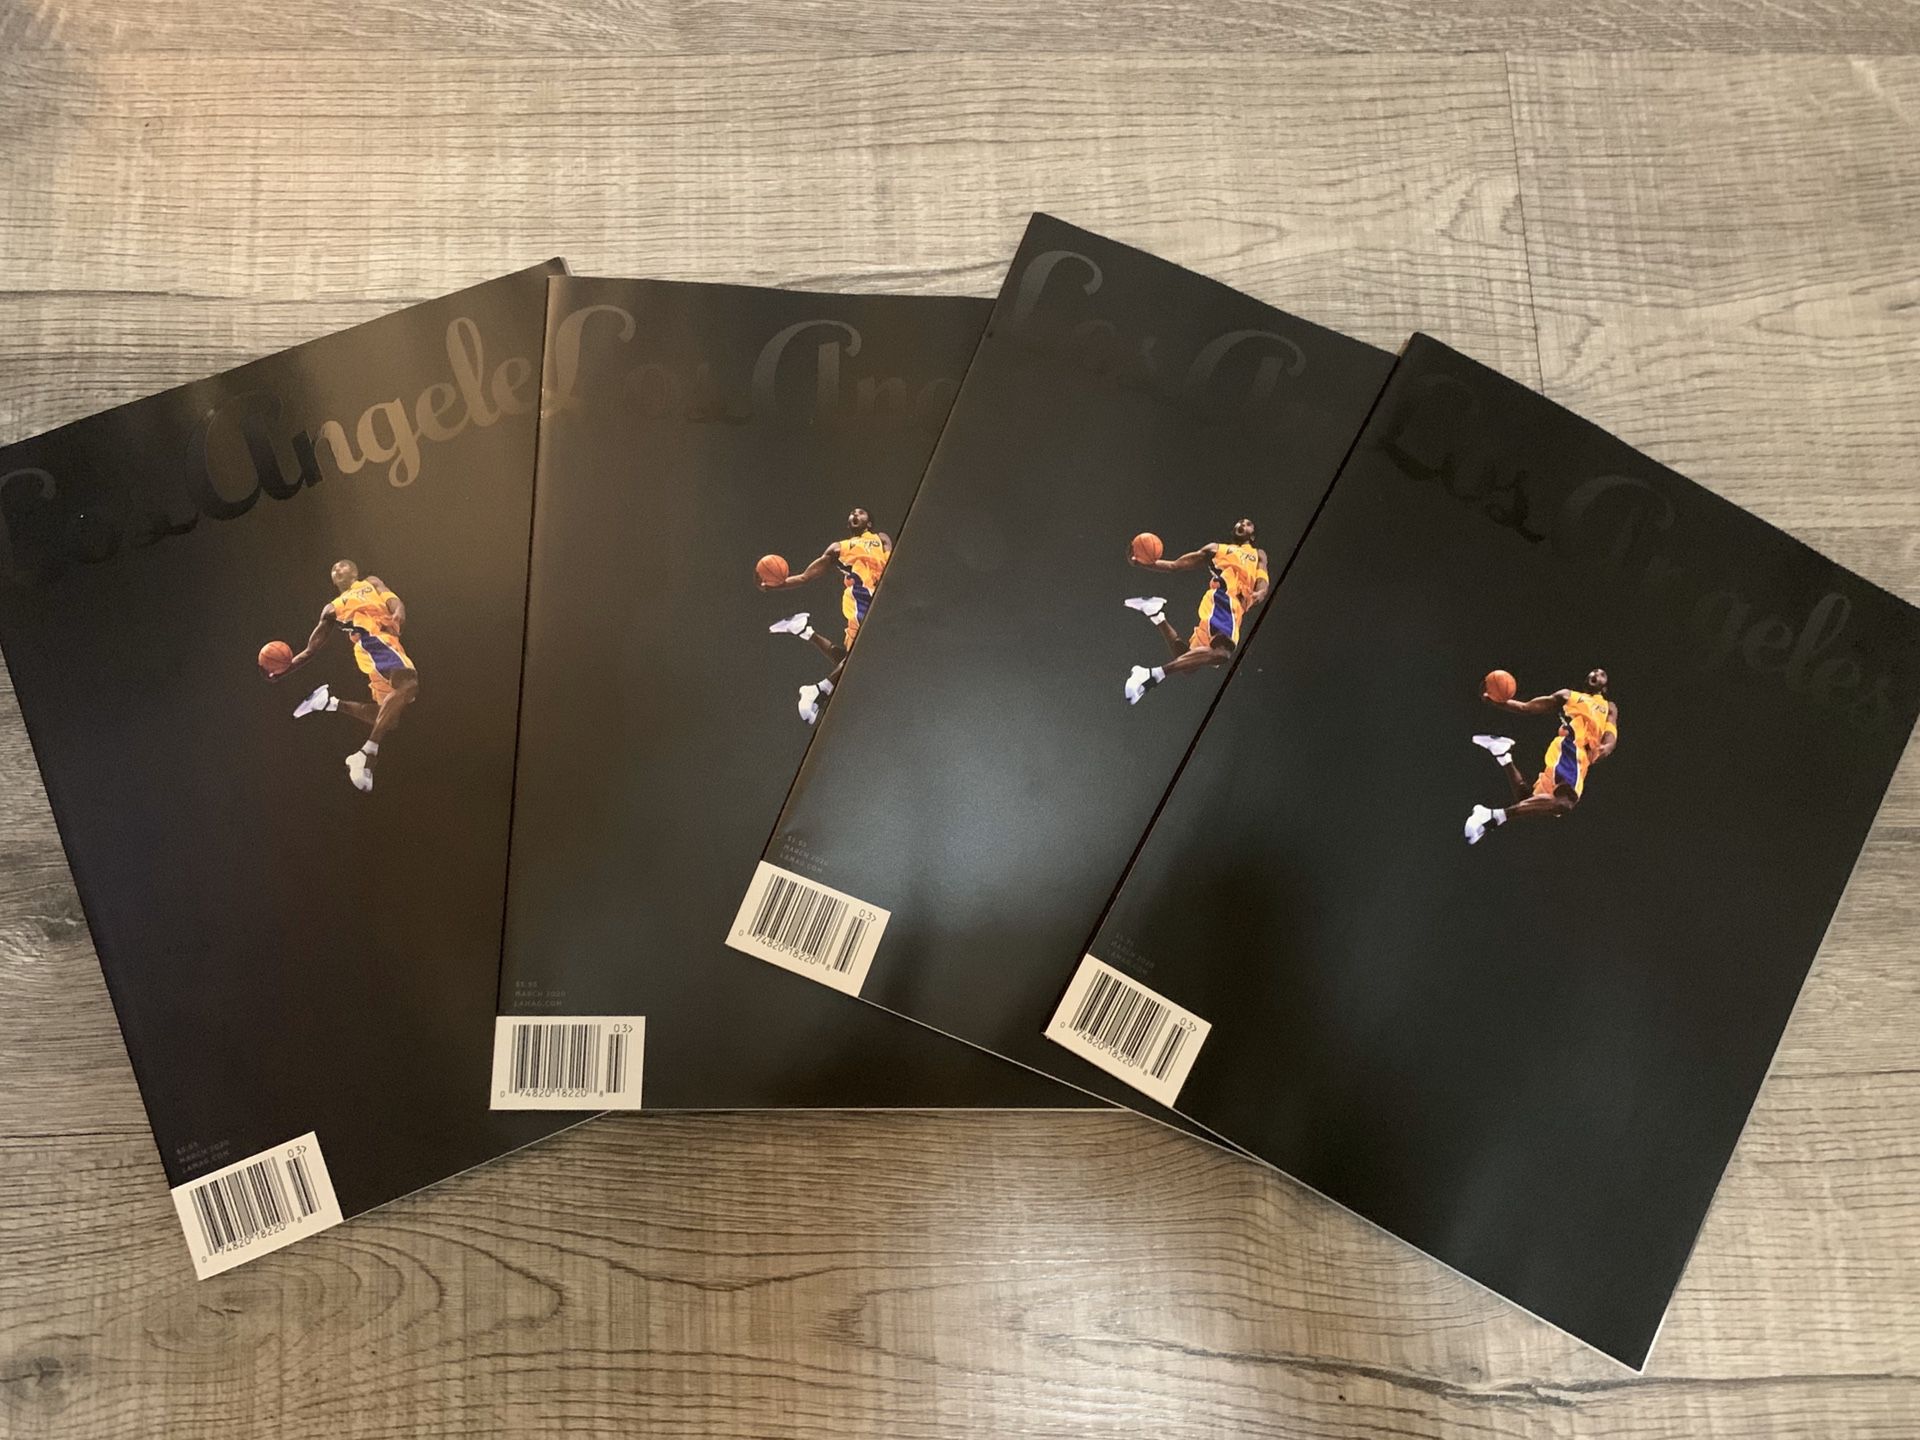 Kobe Bryant cover magazine